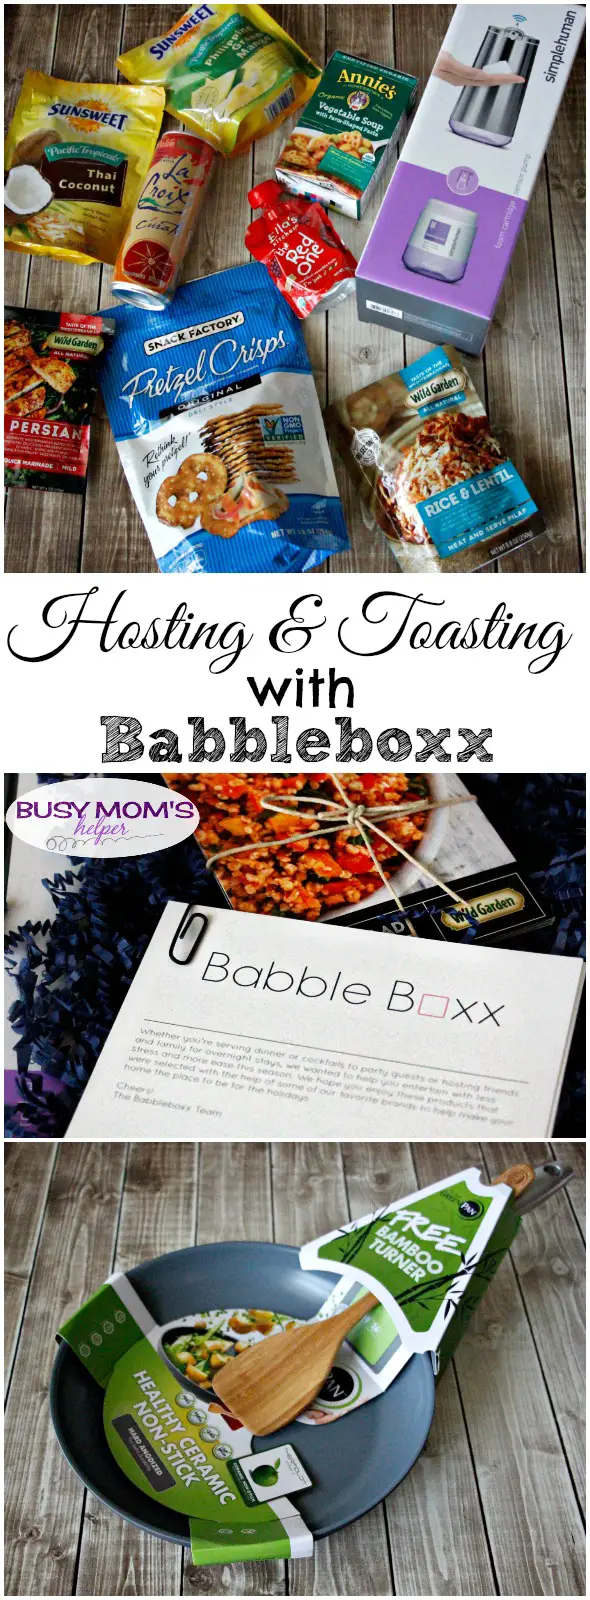 Hosting & Toasting with Babbleboxx #sponsored #HostToastBabbleboxx